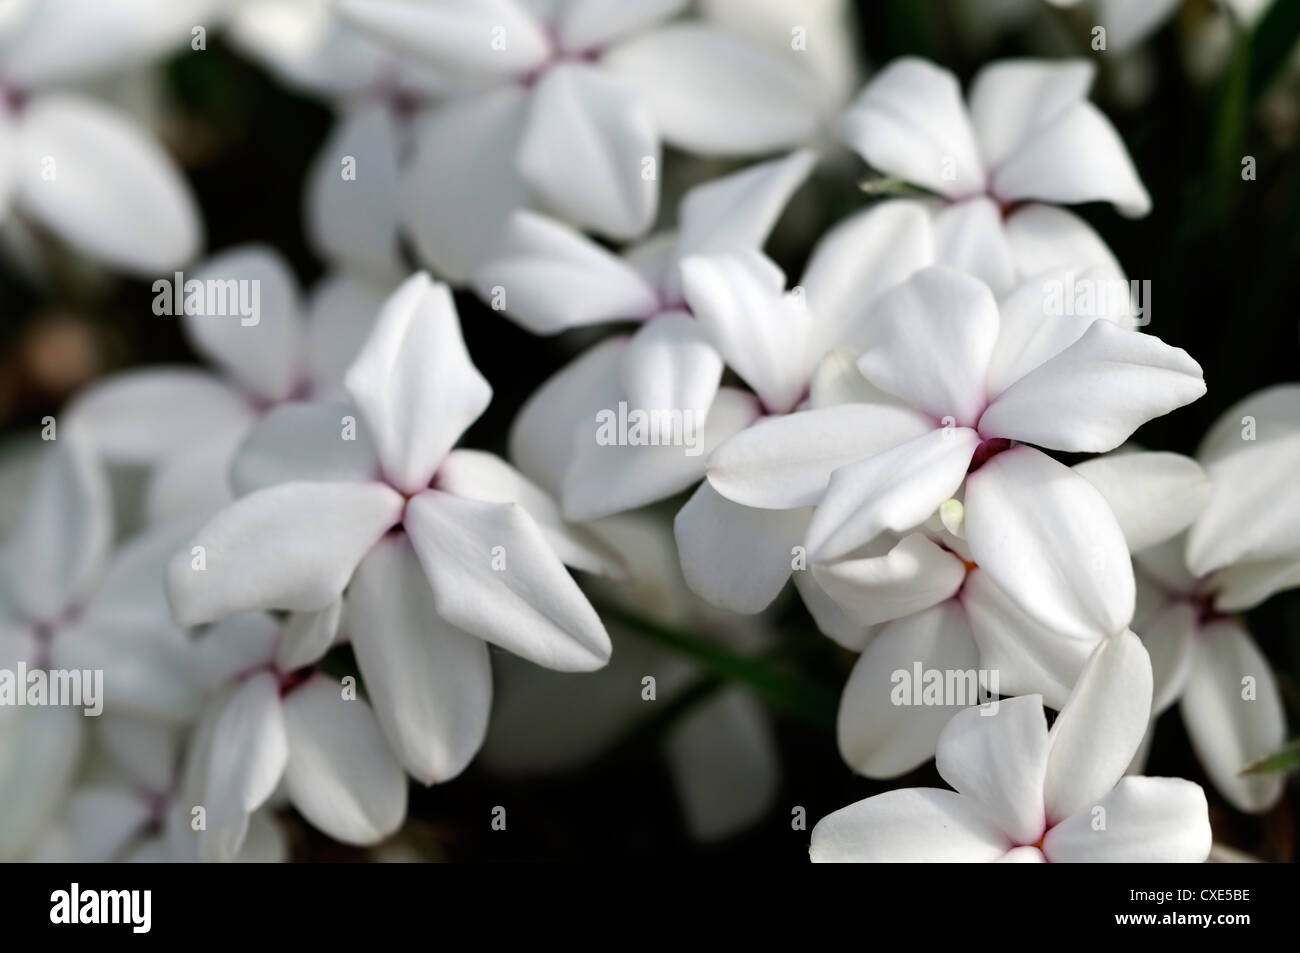 Rhodohypoxis helen white perennial alpine flower bloom blossom closeup close up detail macro Stock Photo